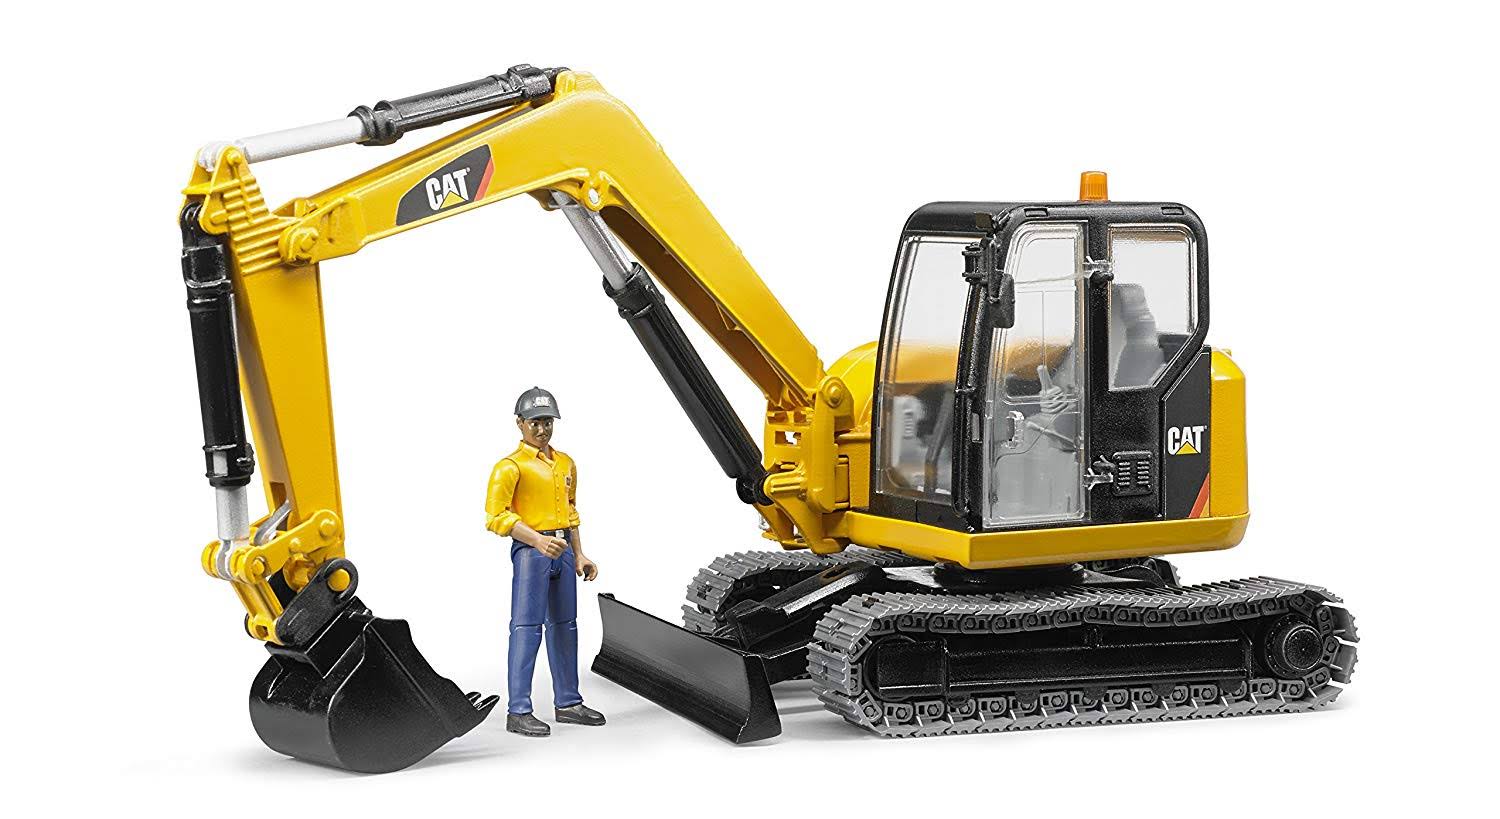 Bruder Toys Cat Mini Excavator With Worker